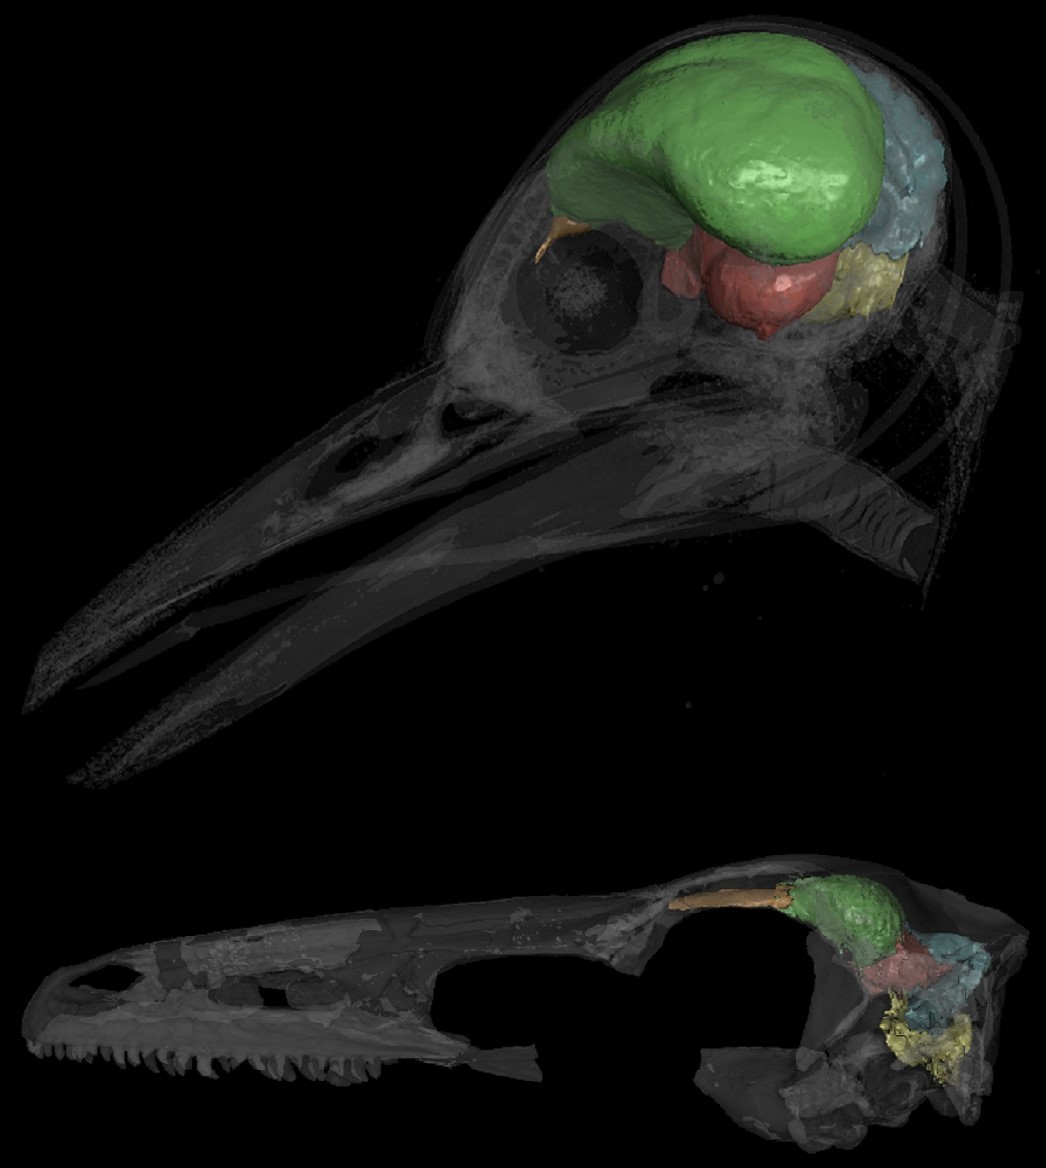 Bird brain fossils combined